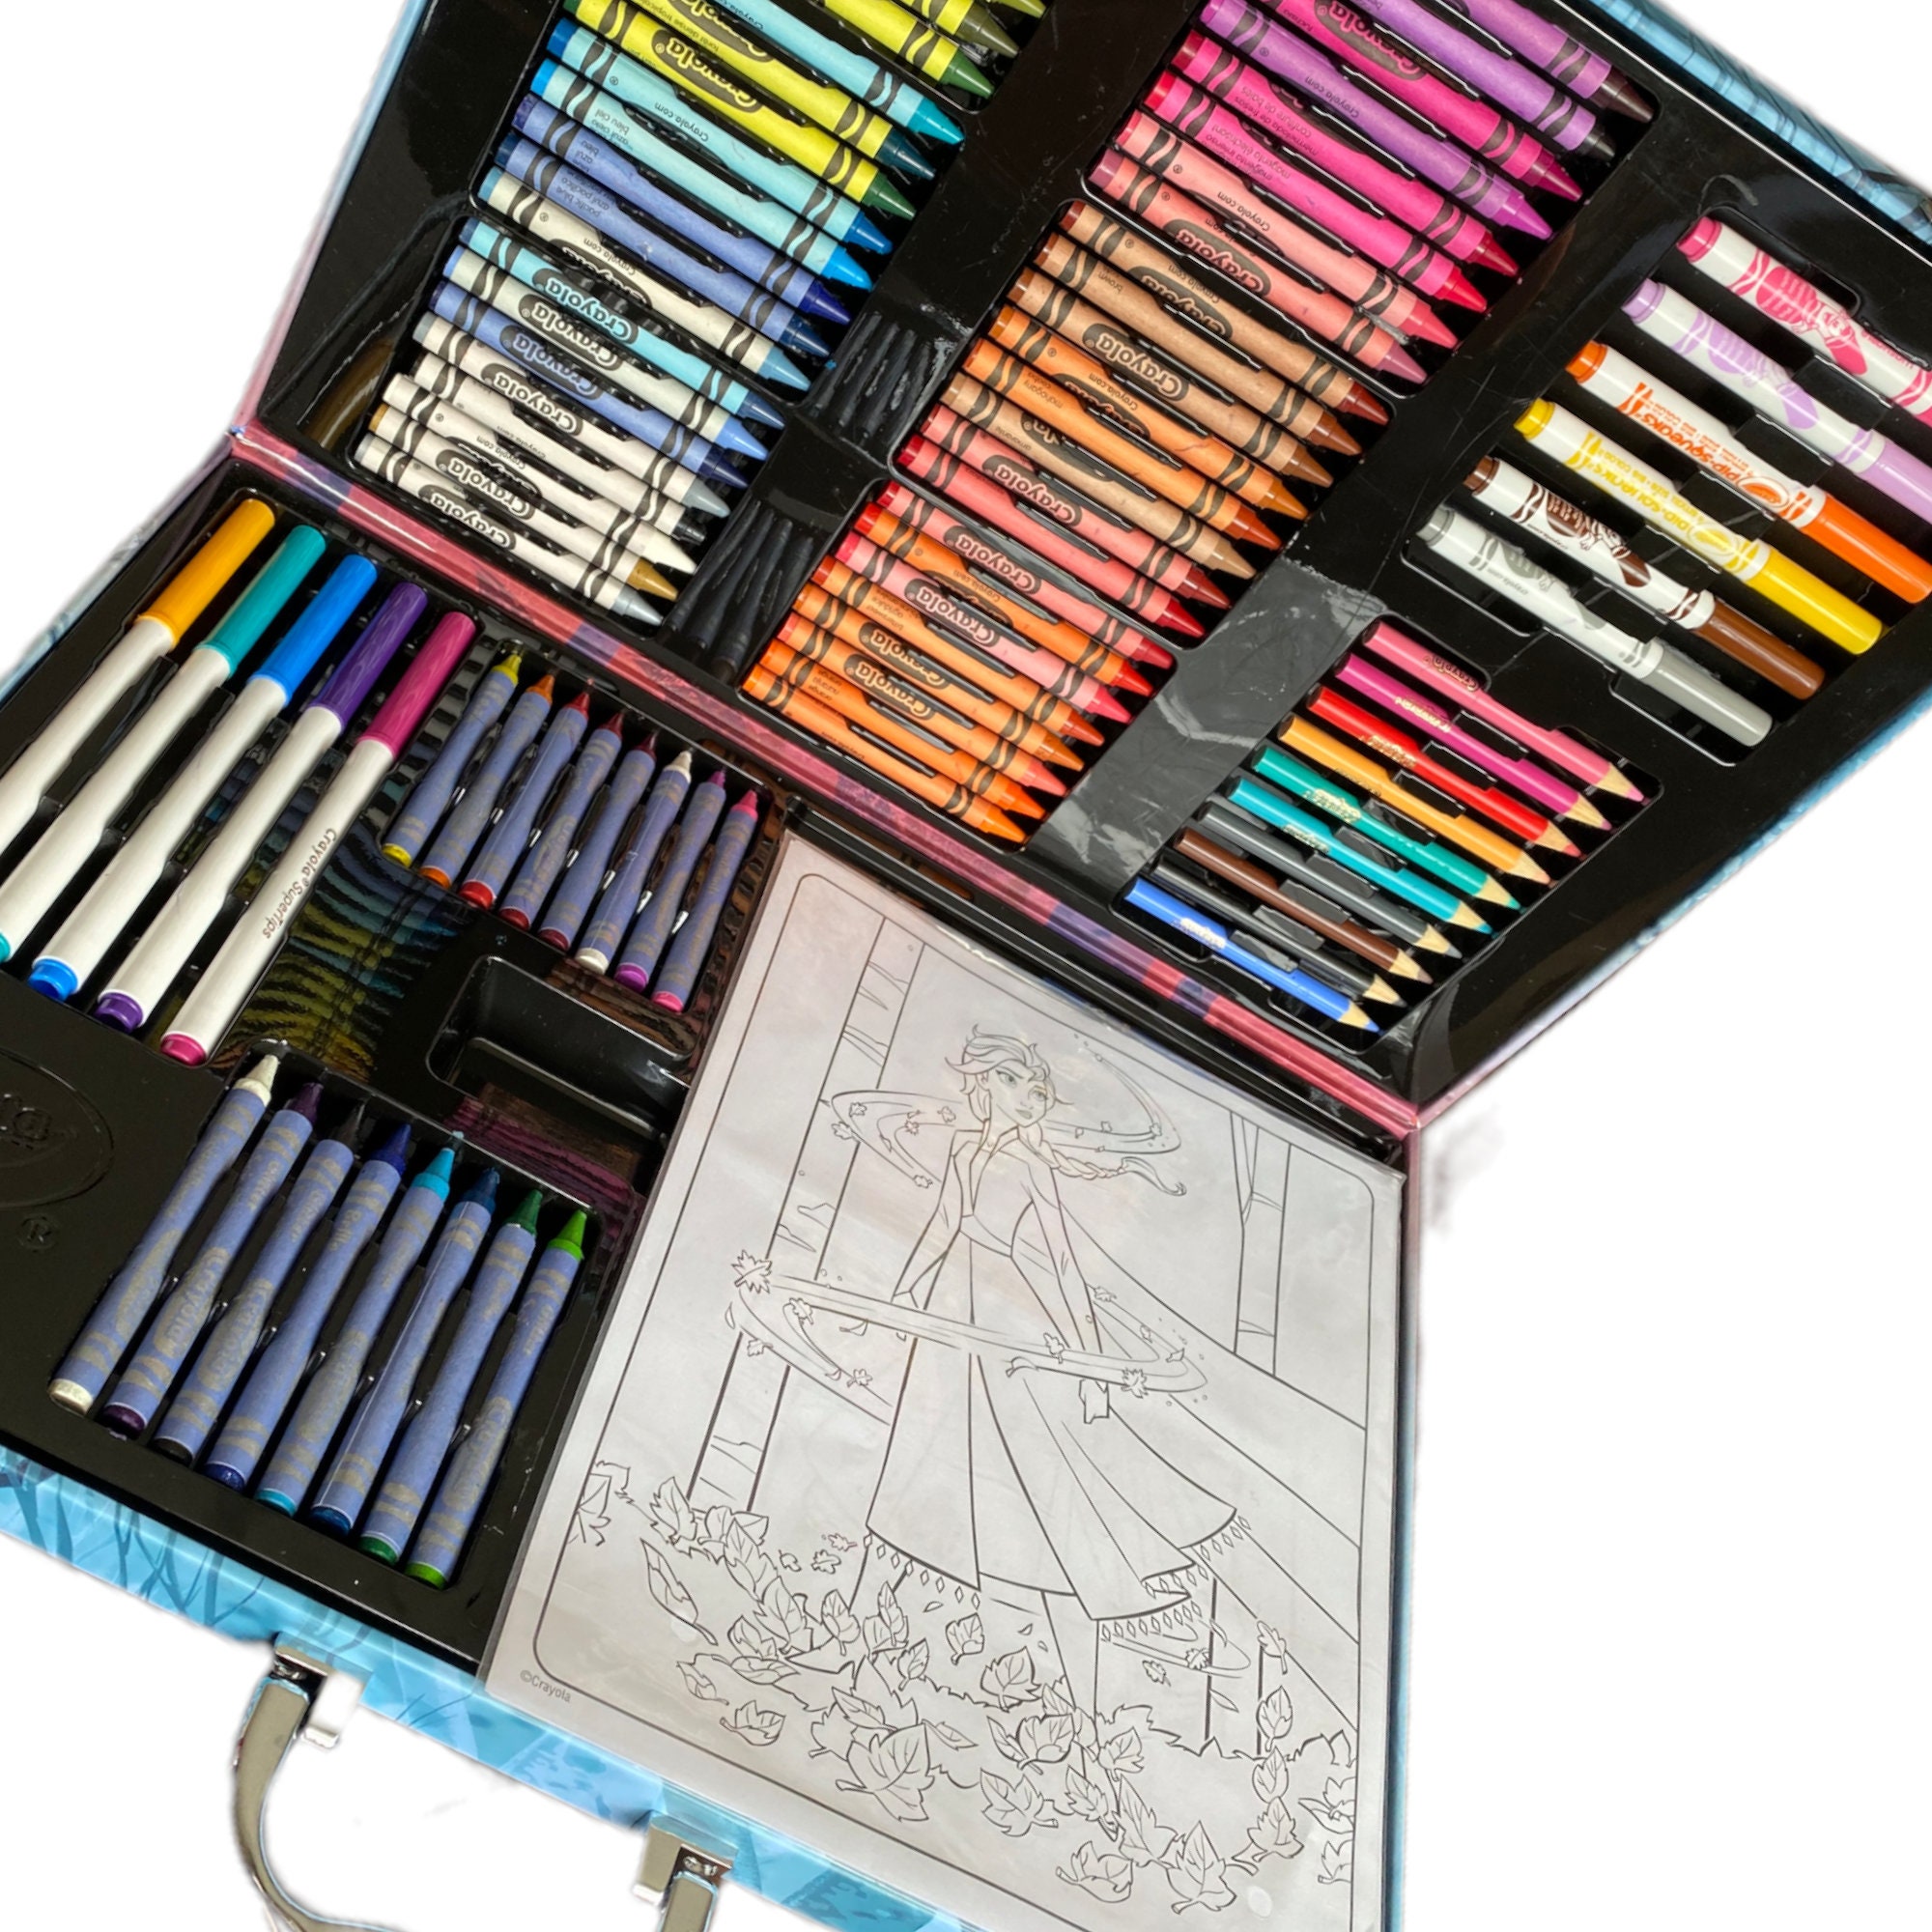 Crayola Inspiration Art Case - Frozen, Paw patrol, Rainbow, Mickey